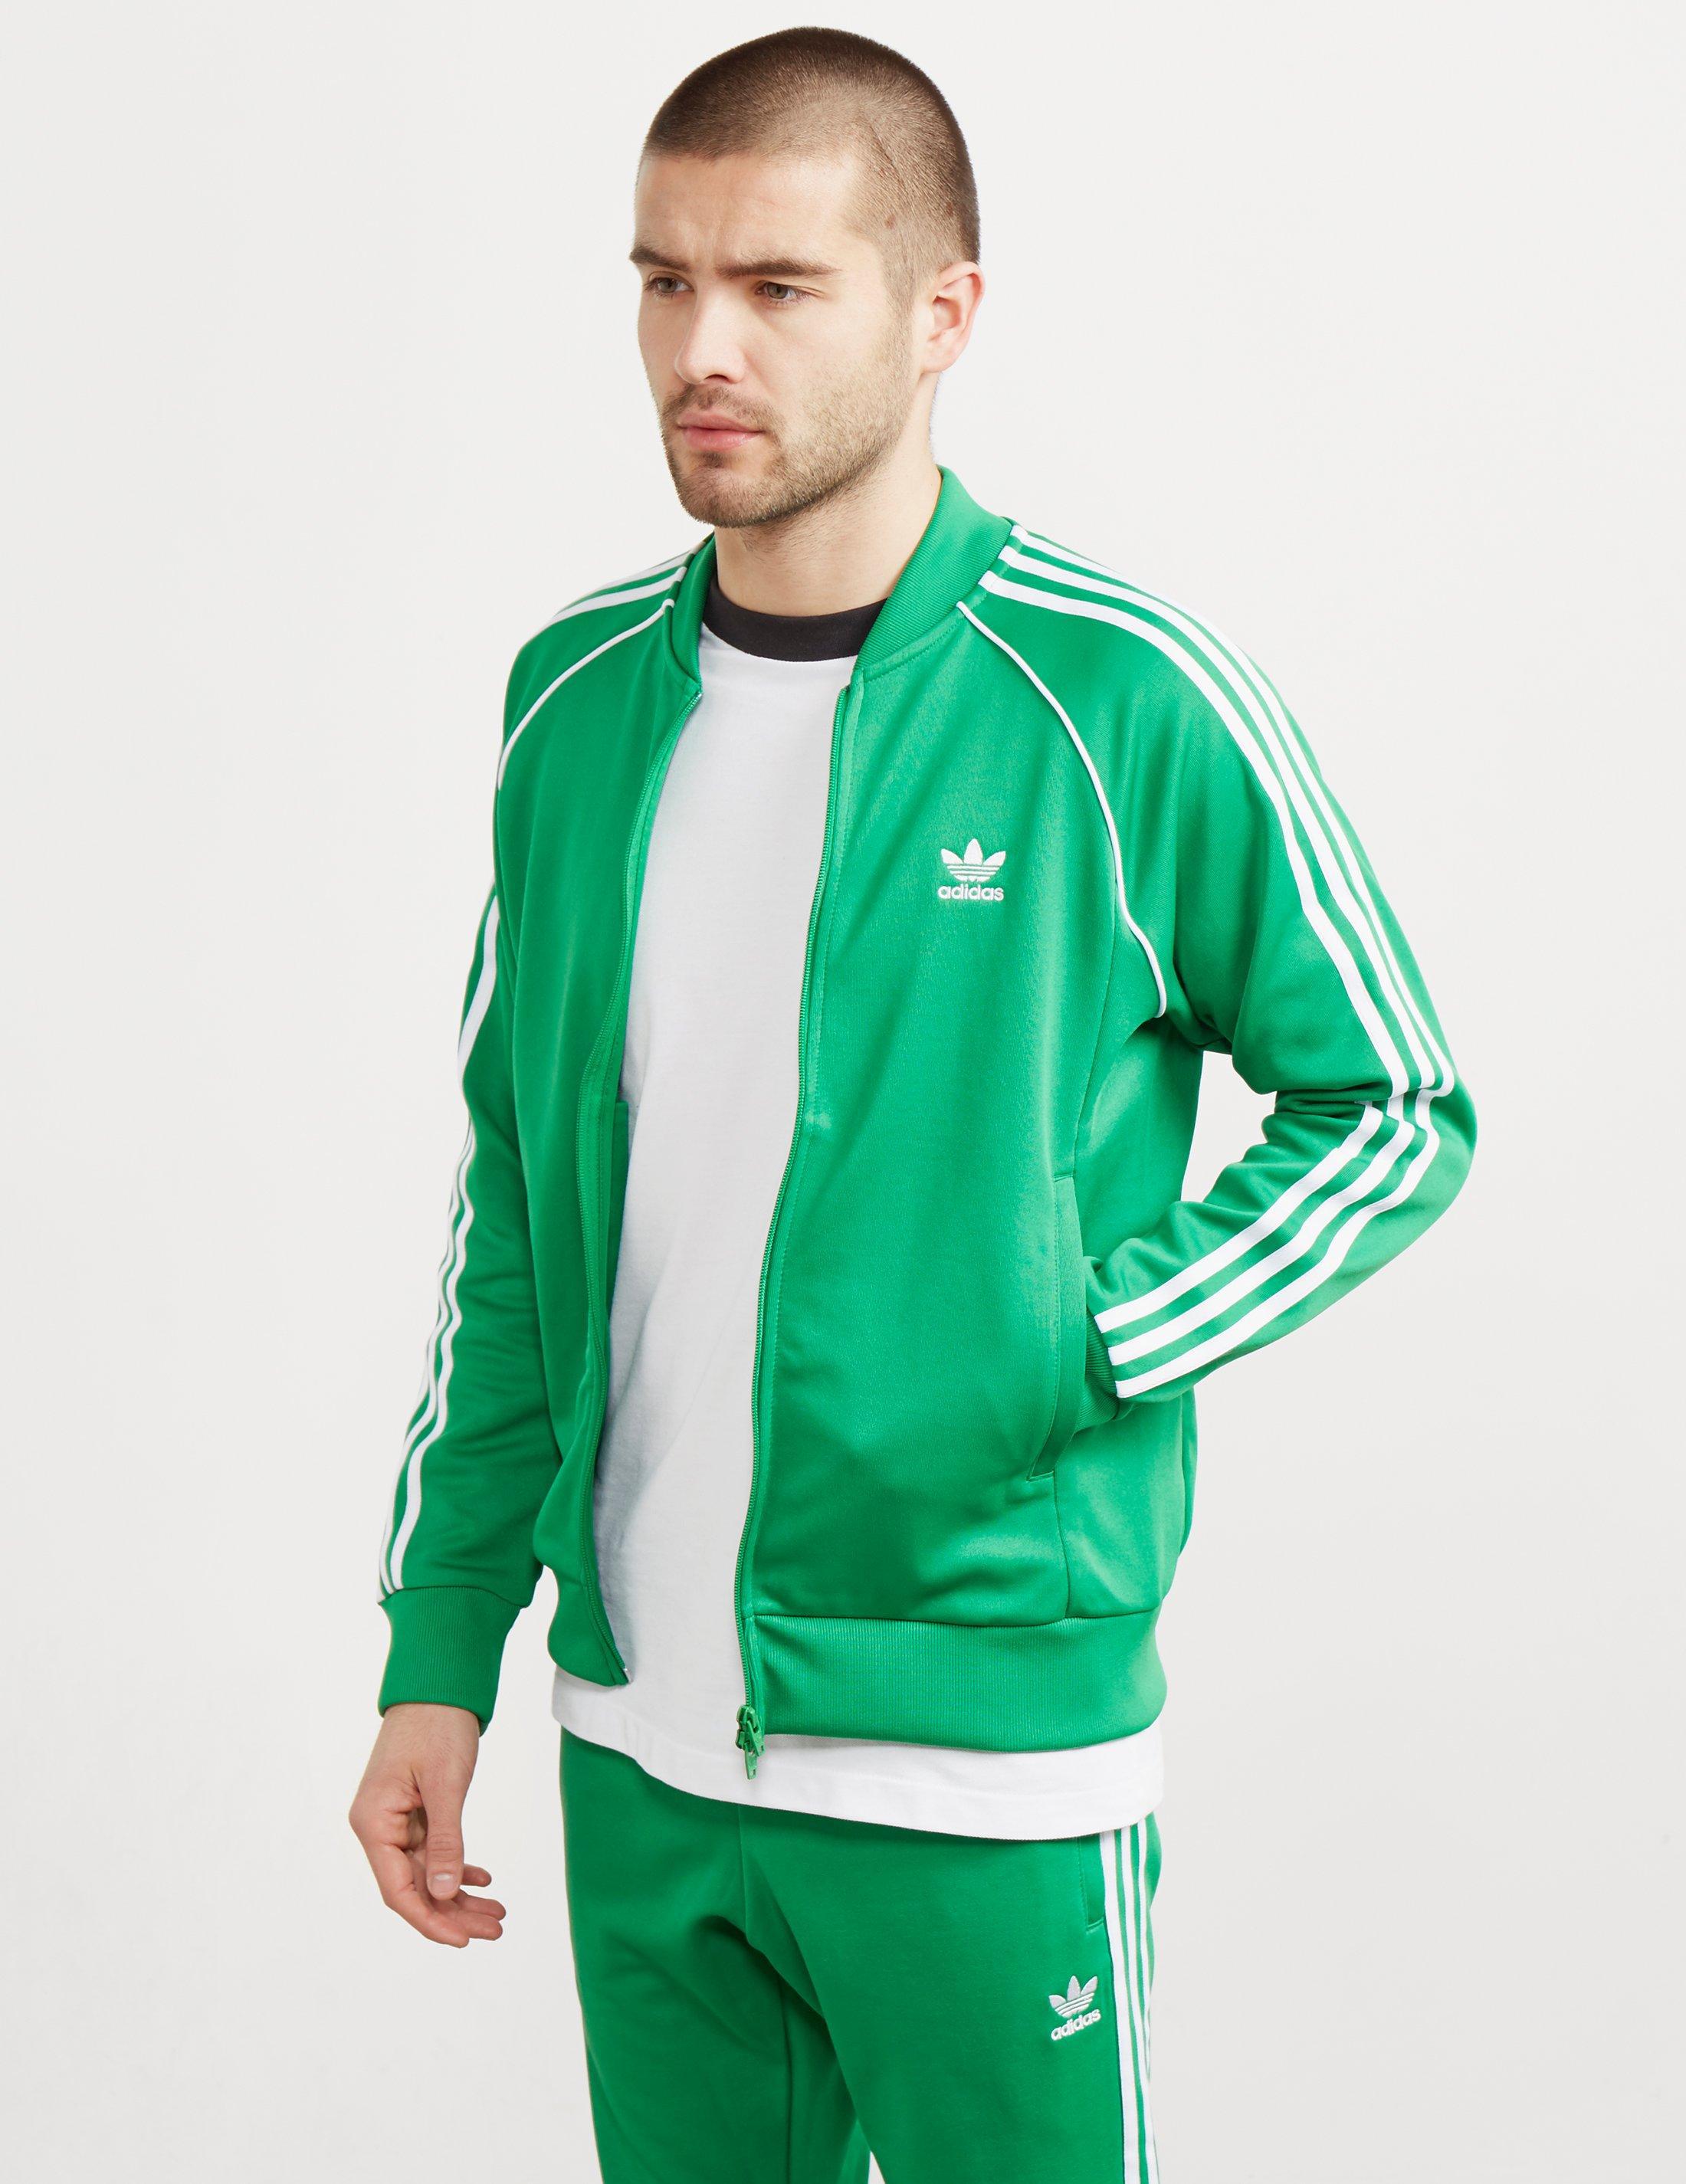 khaki green adidas top